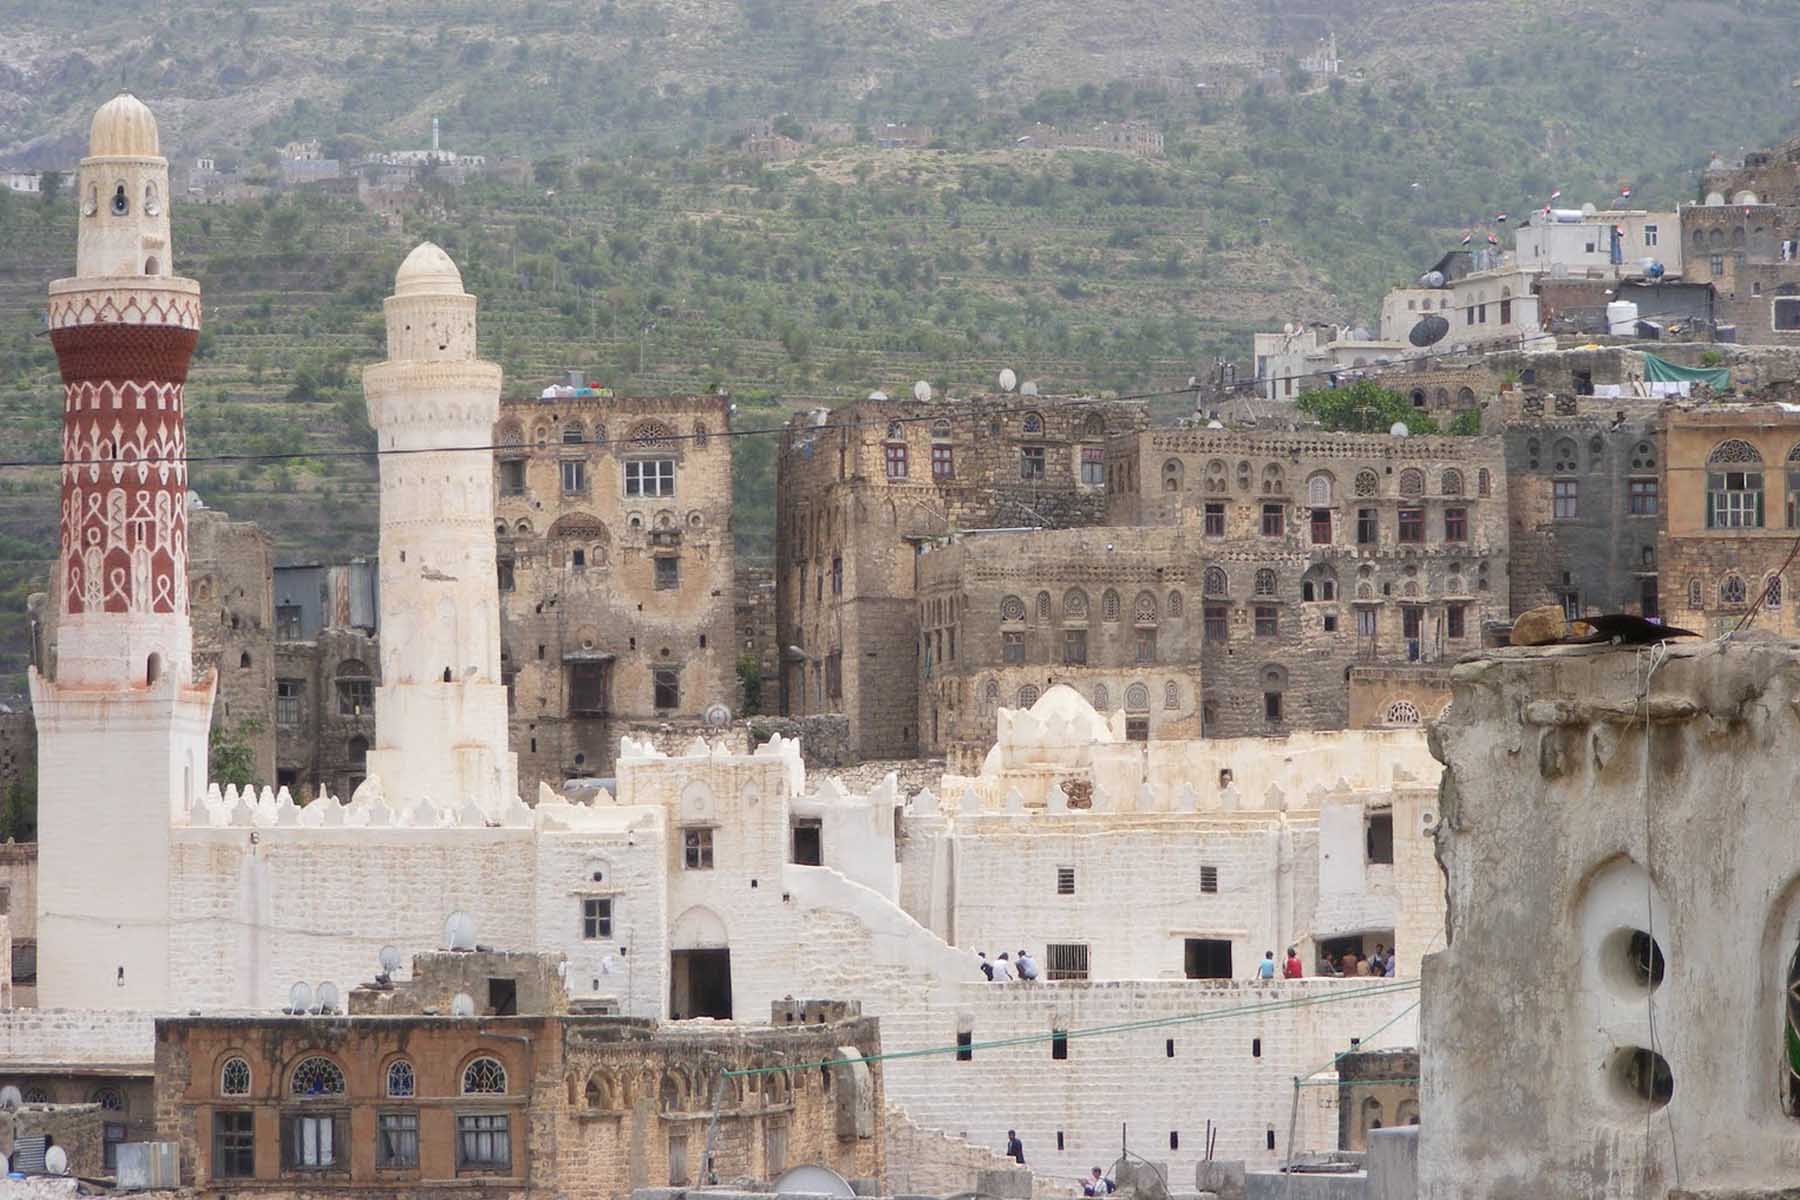 Queen Arwa’s mosque (Dhu Jibla, Yemen)